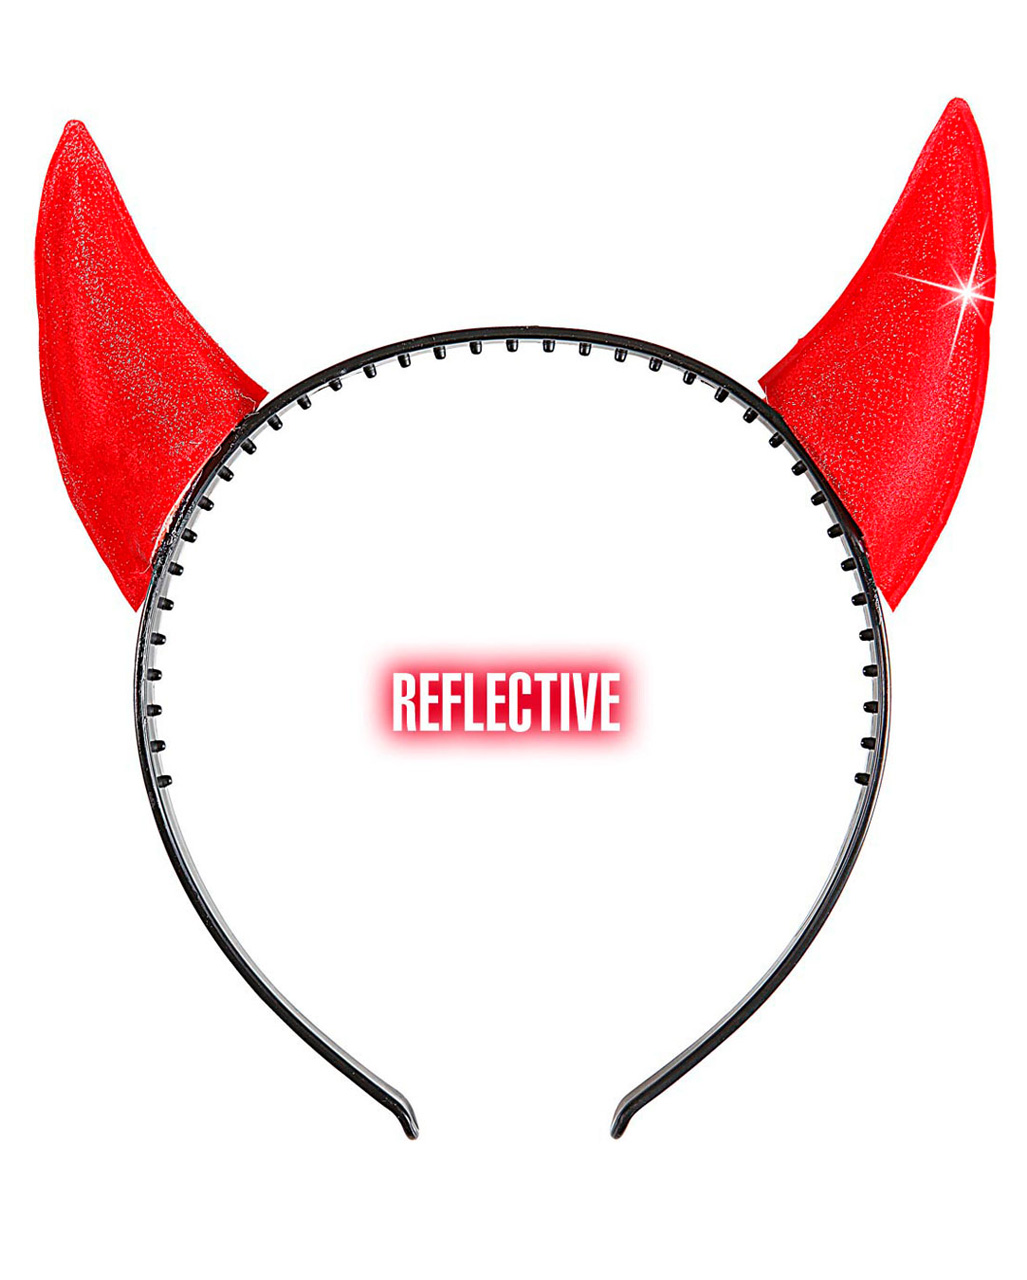 Teufels Hörner Teufelshörner Teufel Zubehör Halloween Accessoires Devil Rot 